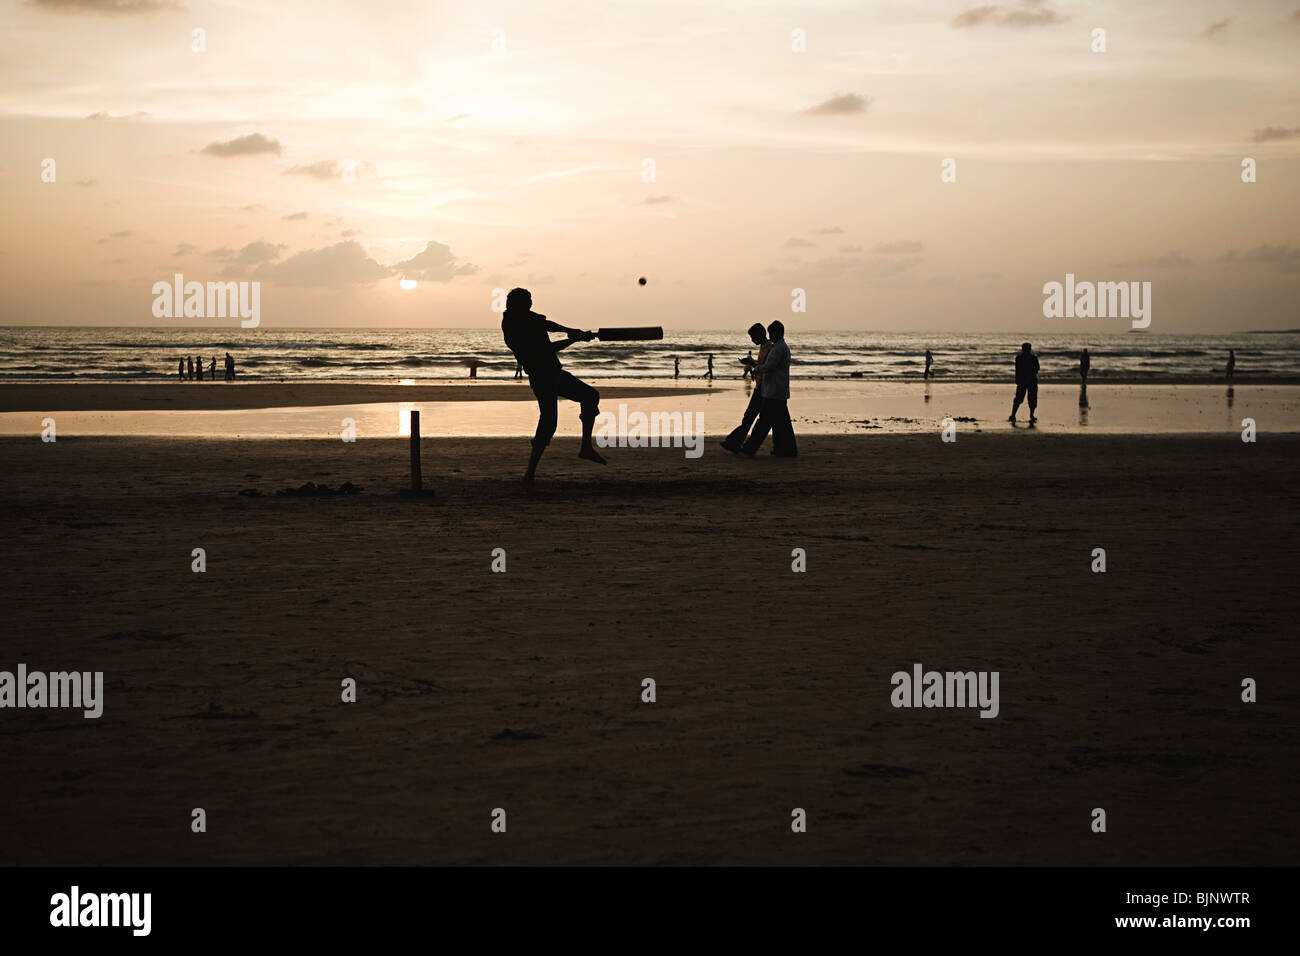 People playing cricket on mumbai beach Stock Photo